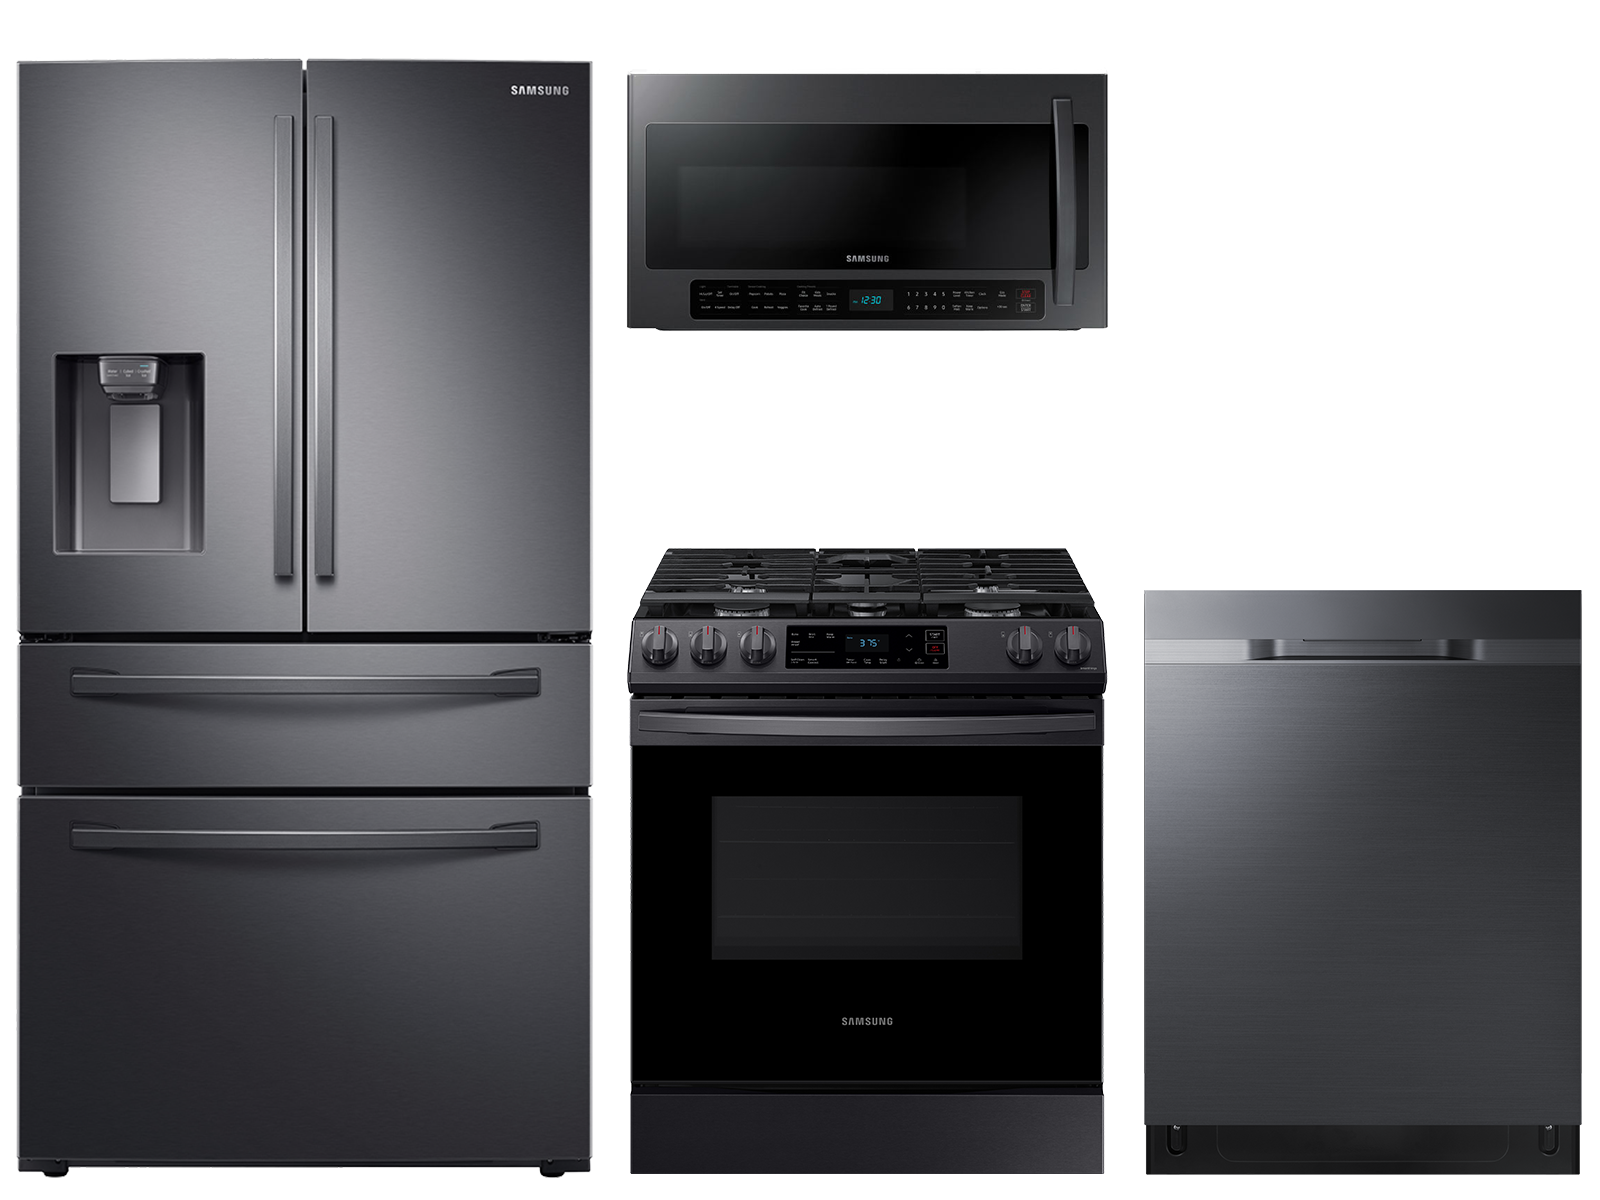 Samsung 28 cu. ft. 4-door refrigerator, gas range, 2.1 cu. ft. microwave and 48 dBA dishwasher package(BNDL-1614027154930)